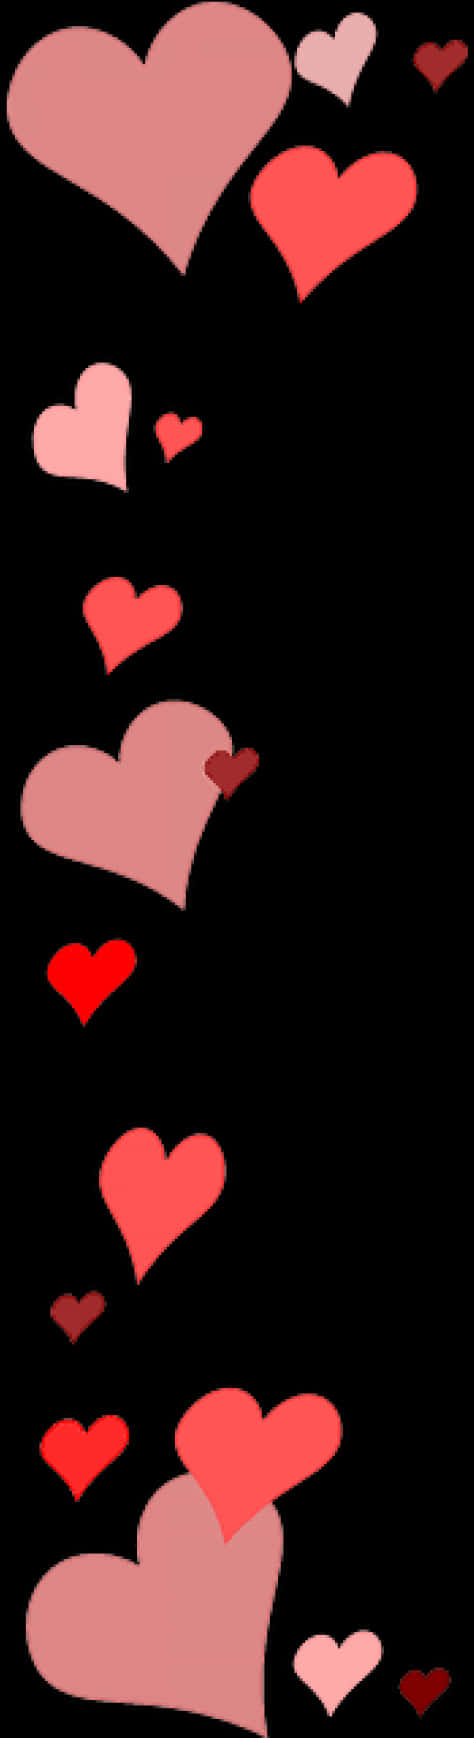 A Close-up Of Hearts